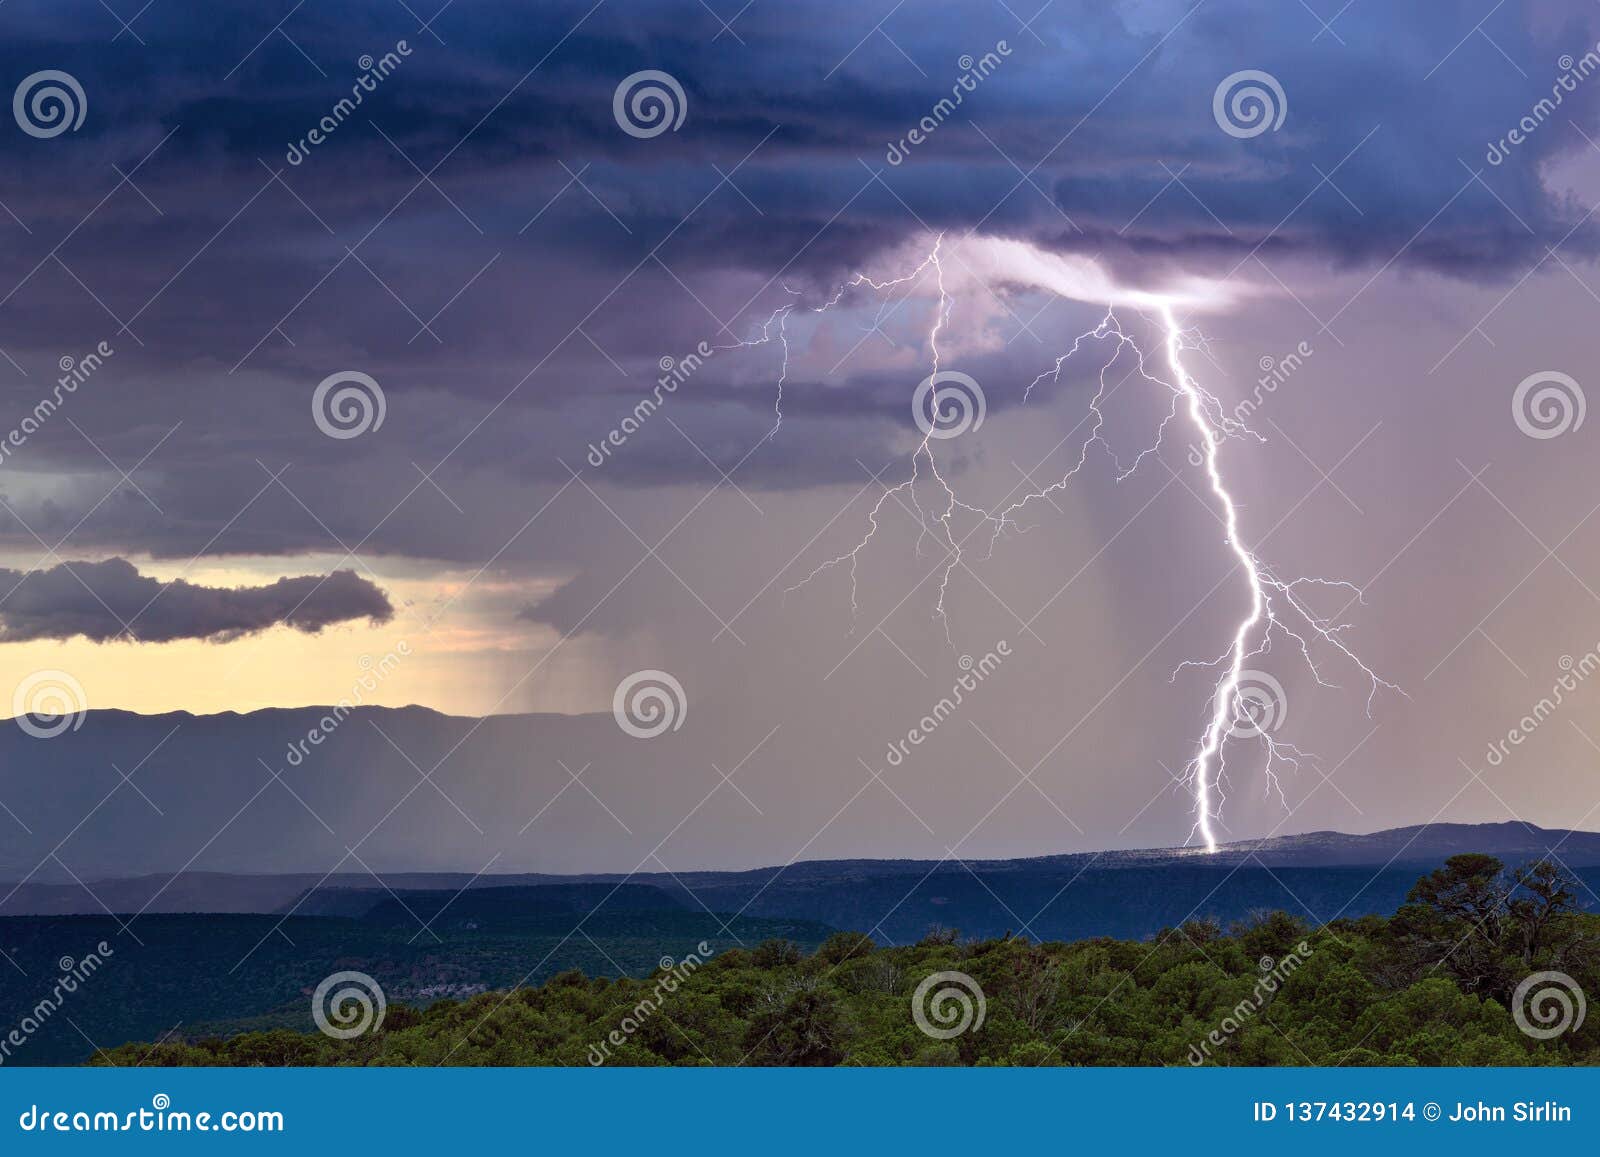 thunderstorm with lightning bolt